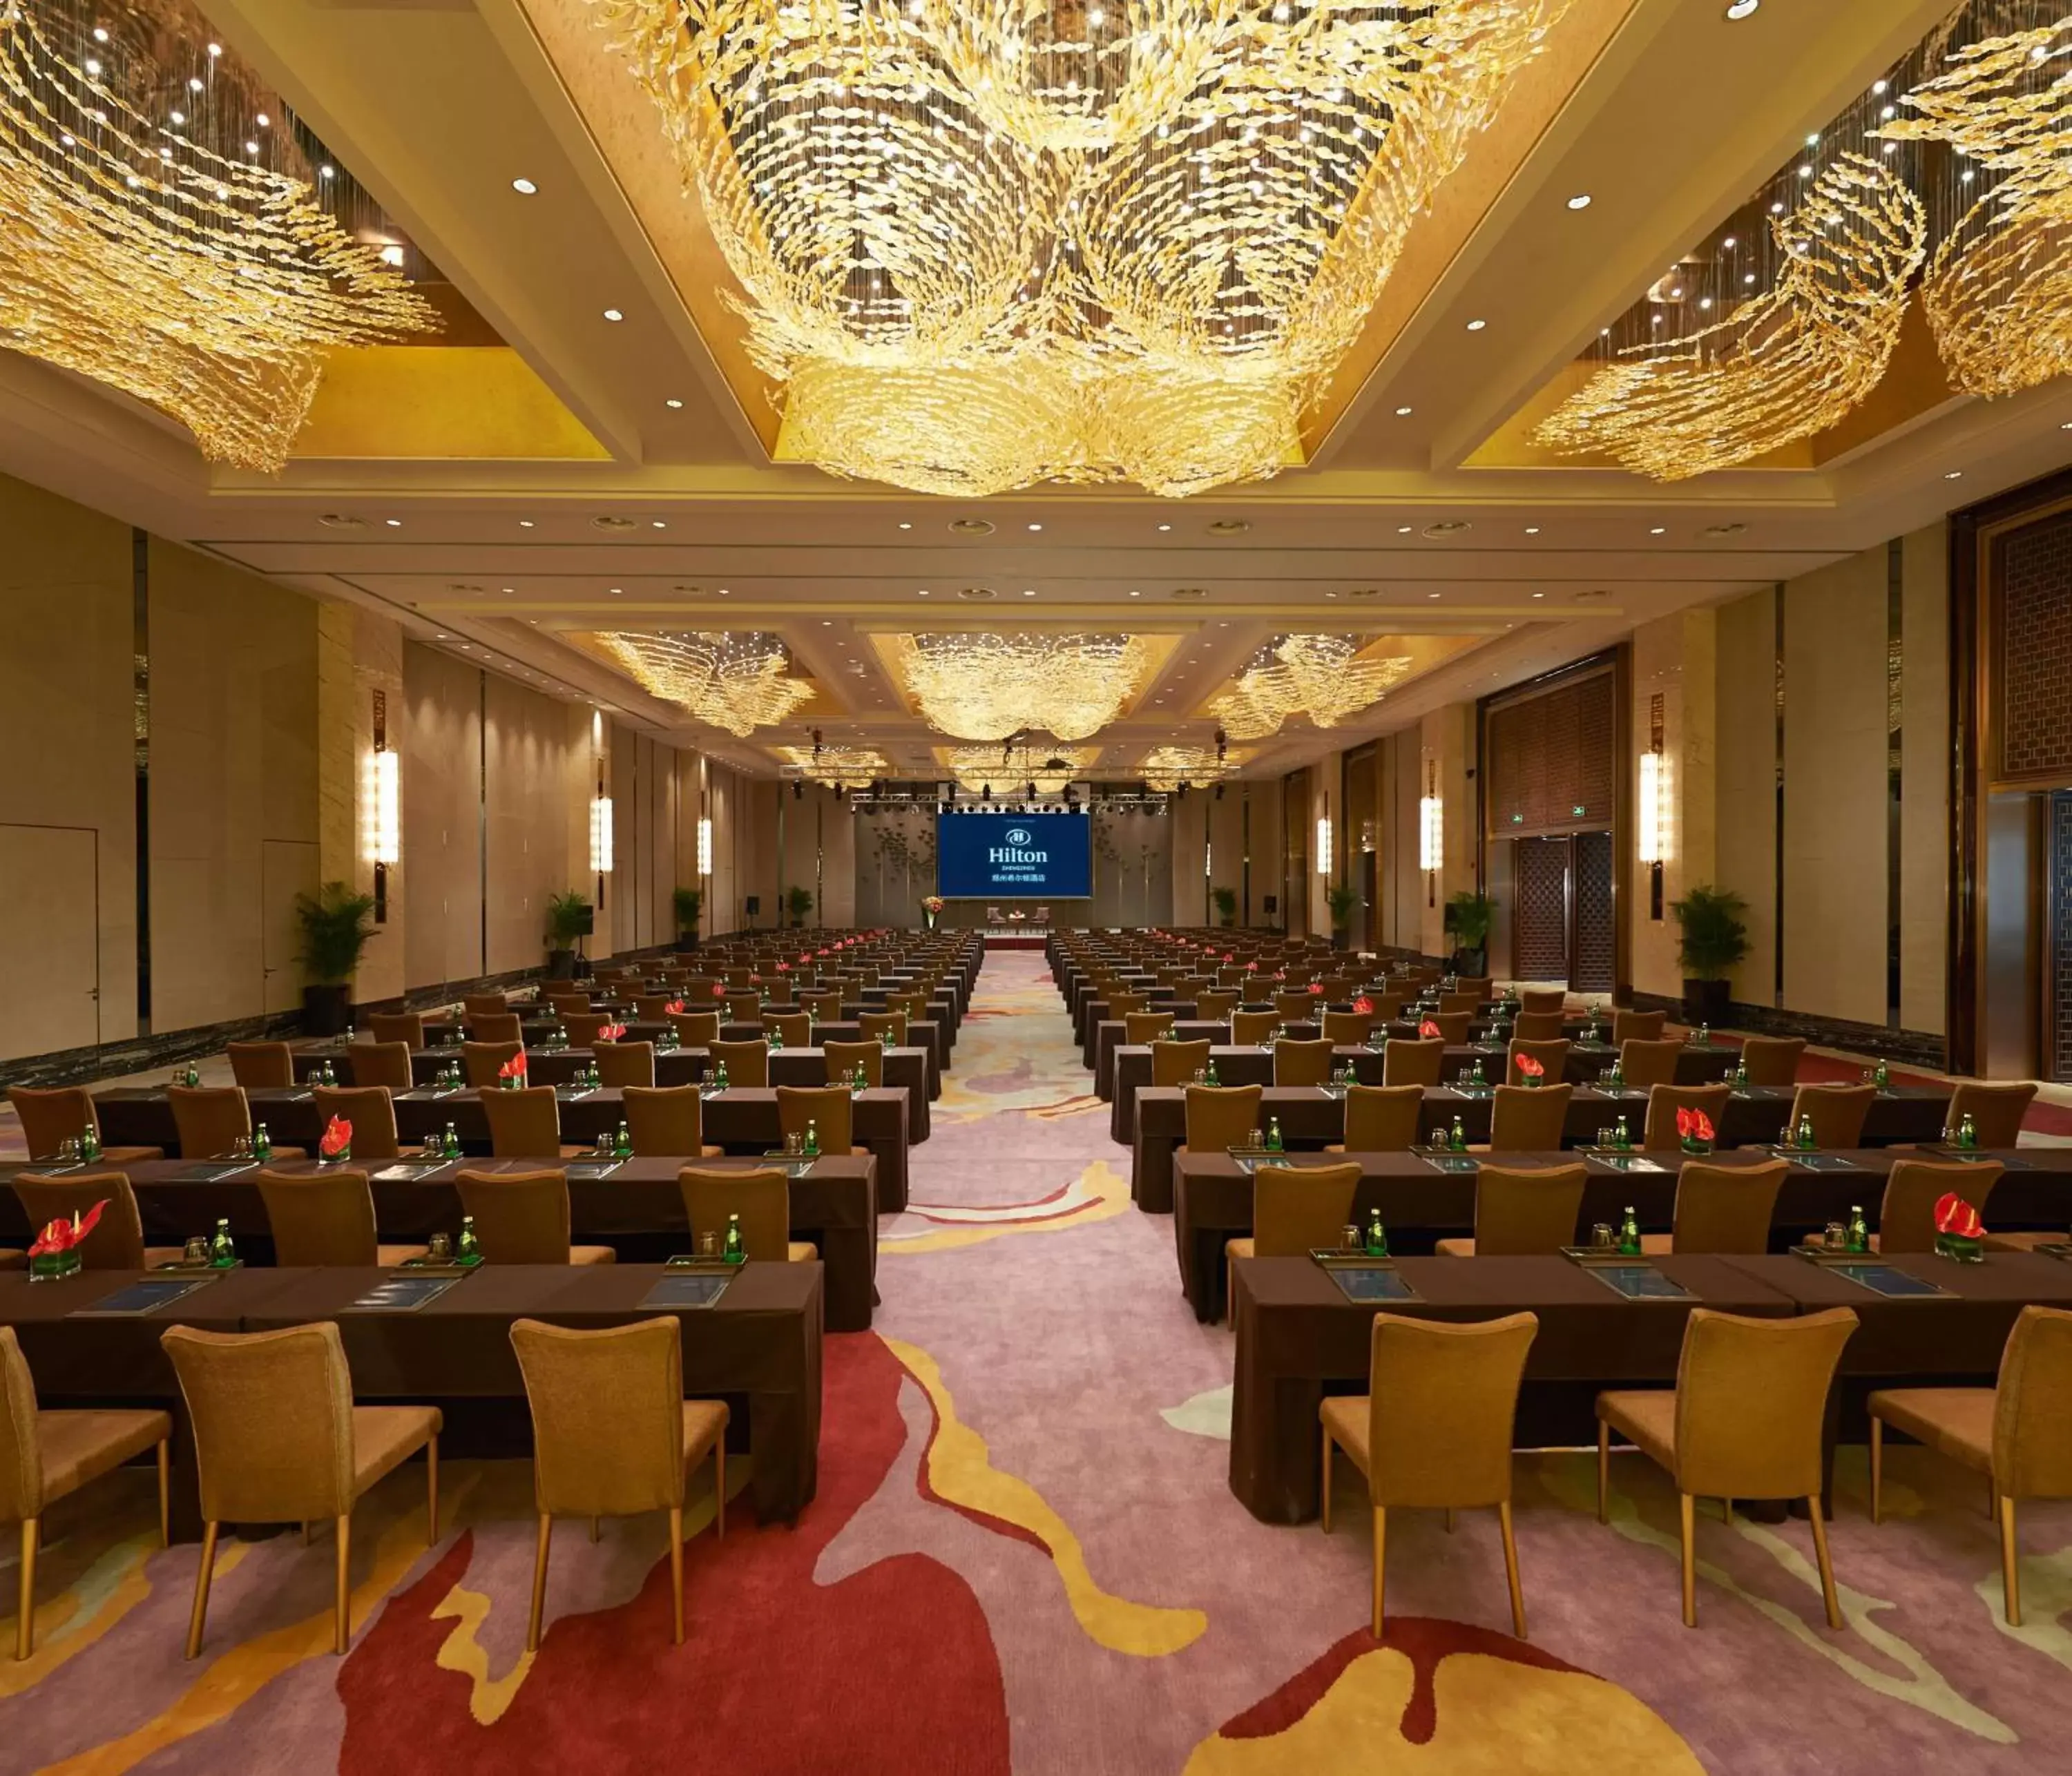 Meeting/conference room in Hilton Zhengzhou